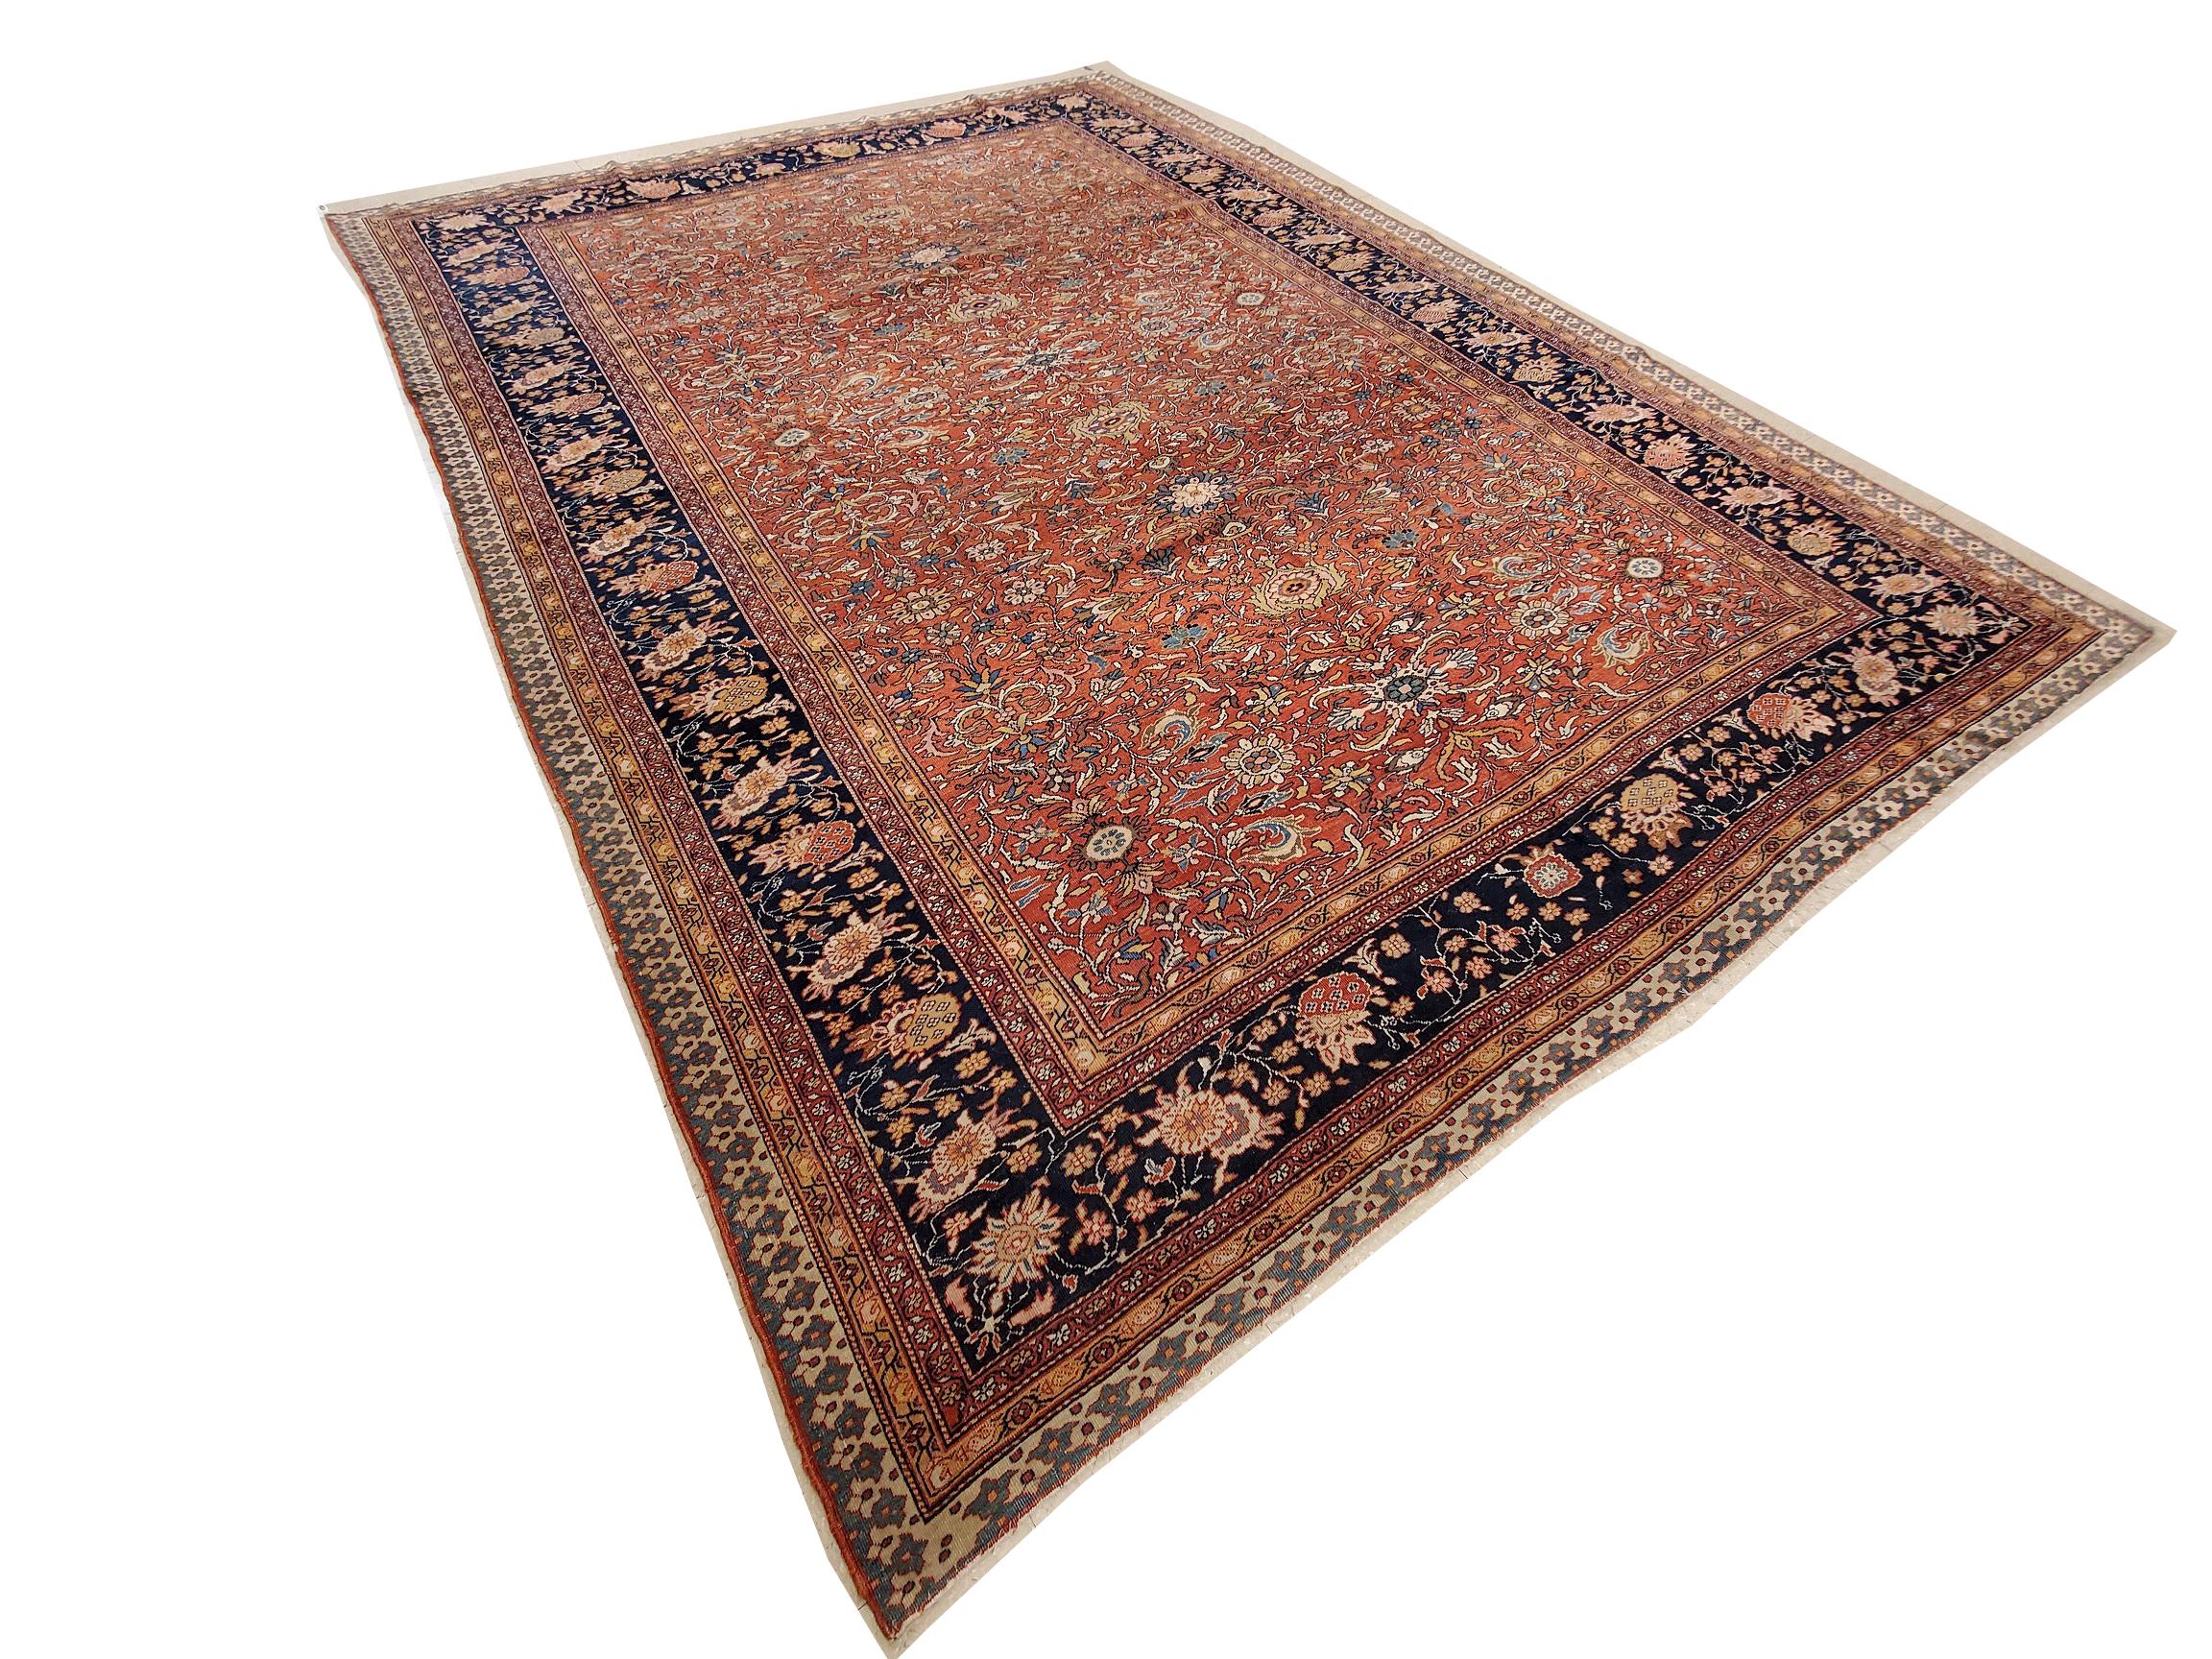 Persian Antique Farahan Sarouk Carpet, Handmade Oriental Rug, Ivory, Red, Navy, Fine  For Sale